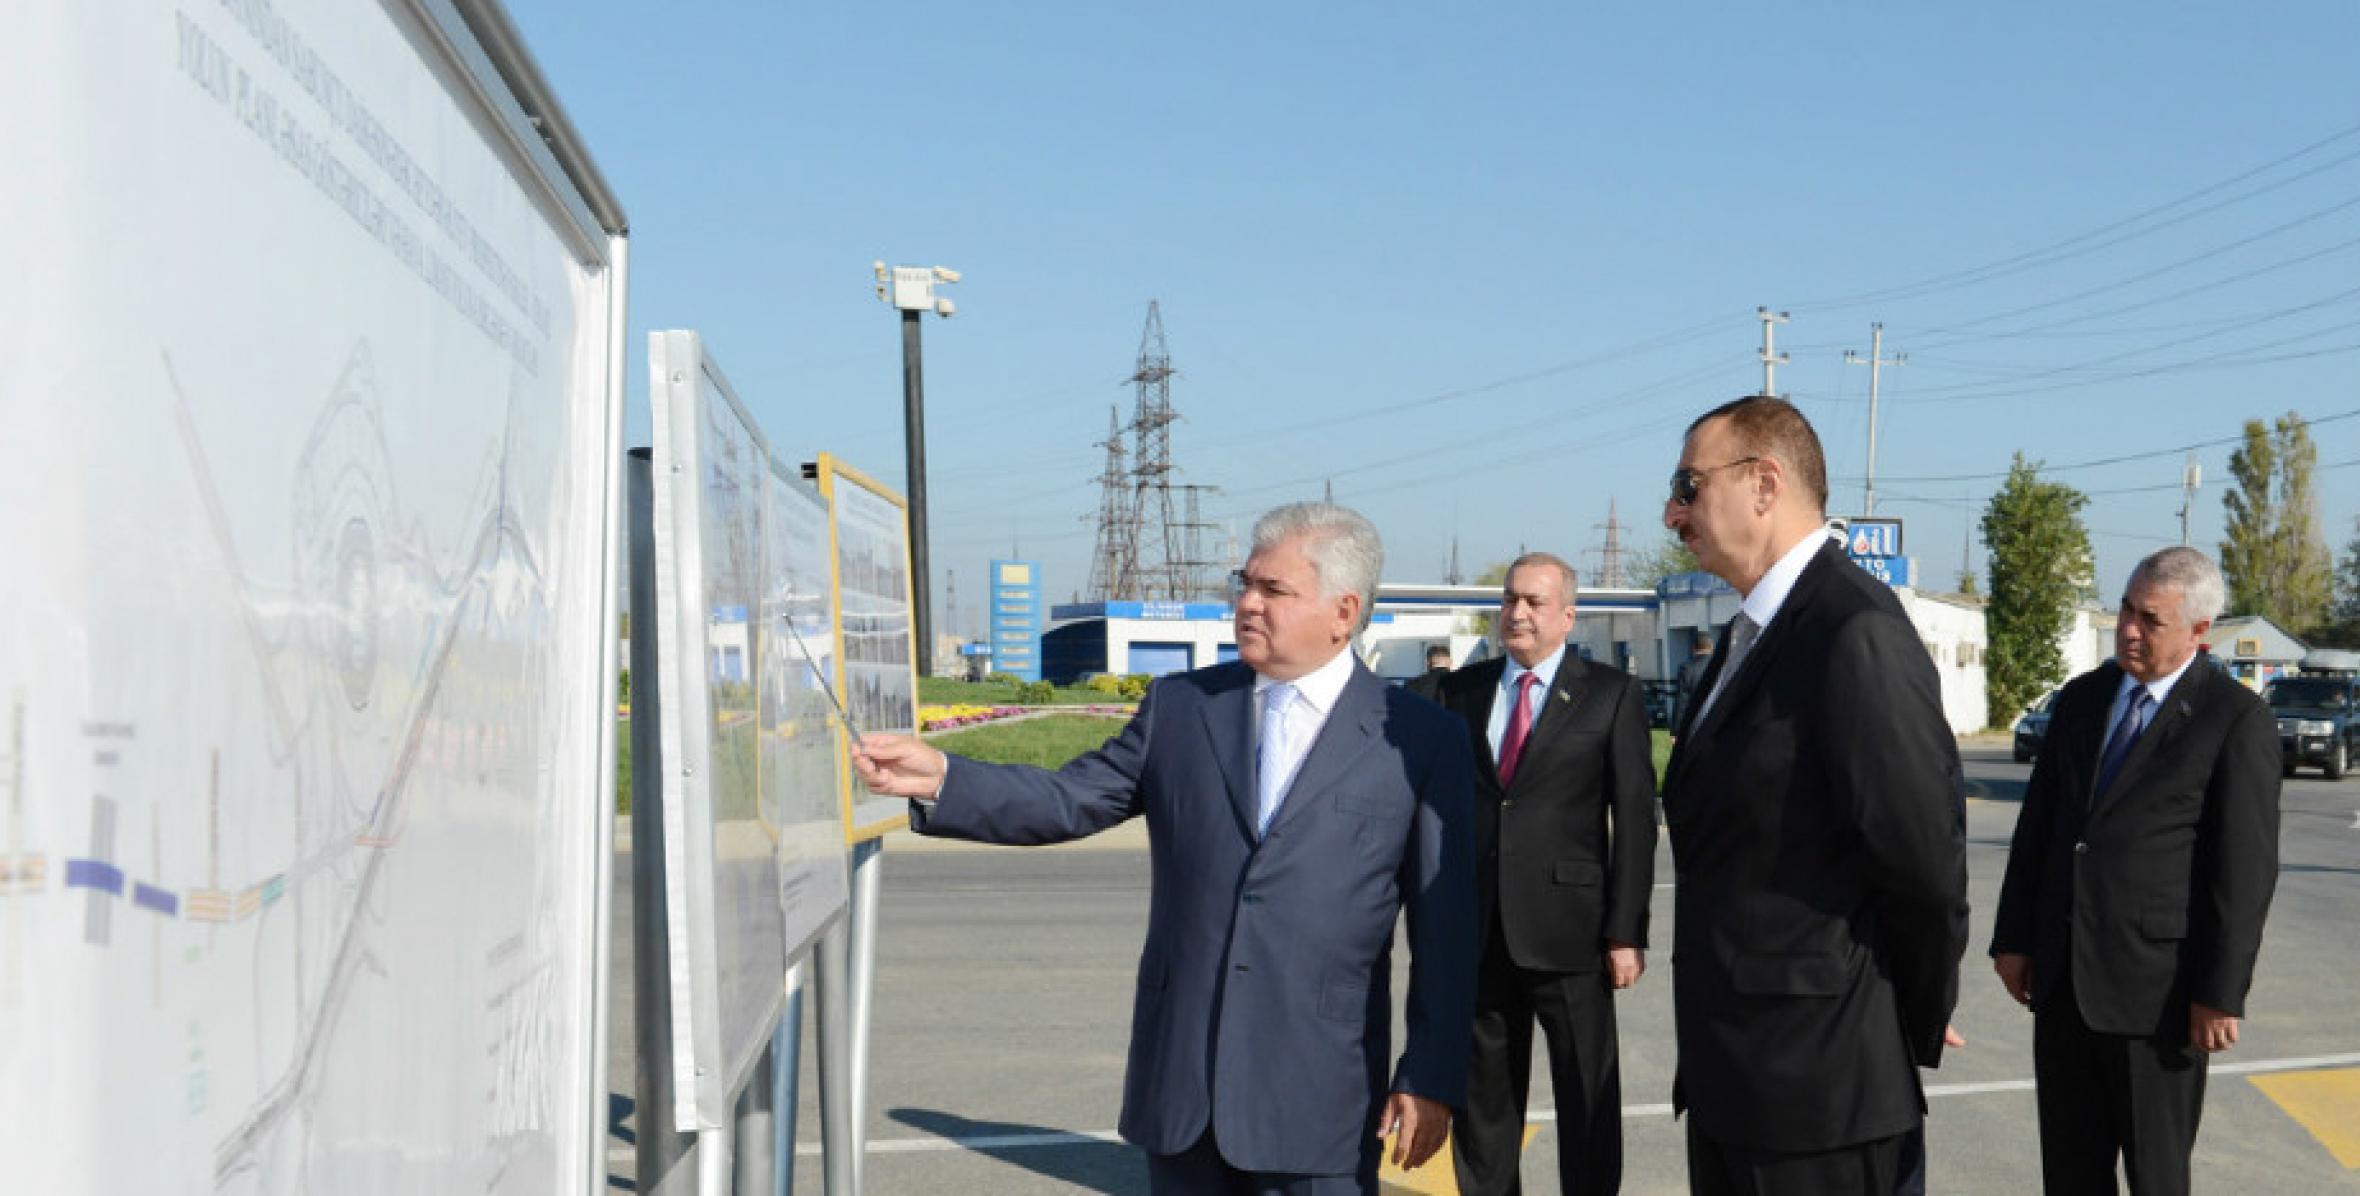 Ilham Aliyev reviewed the Zabrat-Mashtaga-Buzovna and Zabrat-Pirhsagi highways after major overhaul and reconstruction